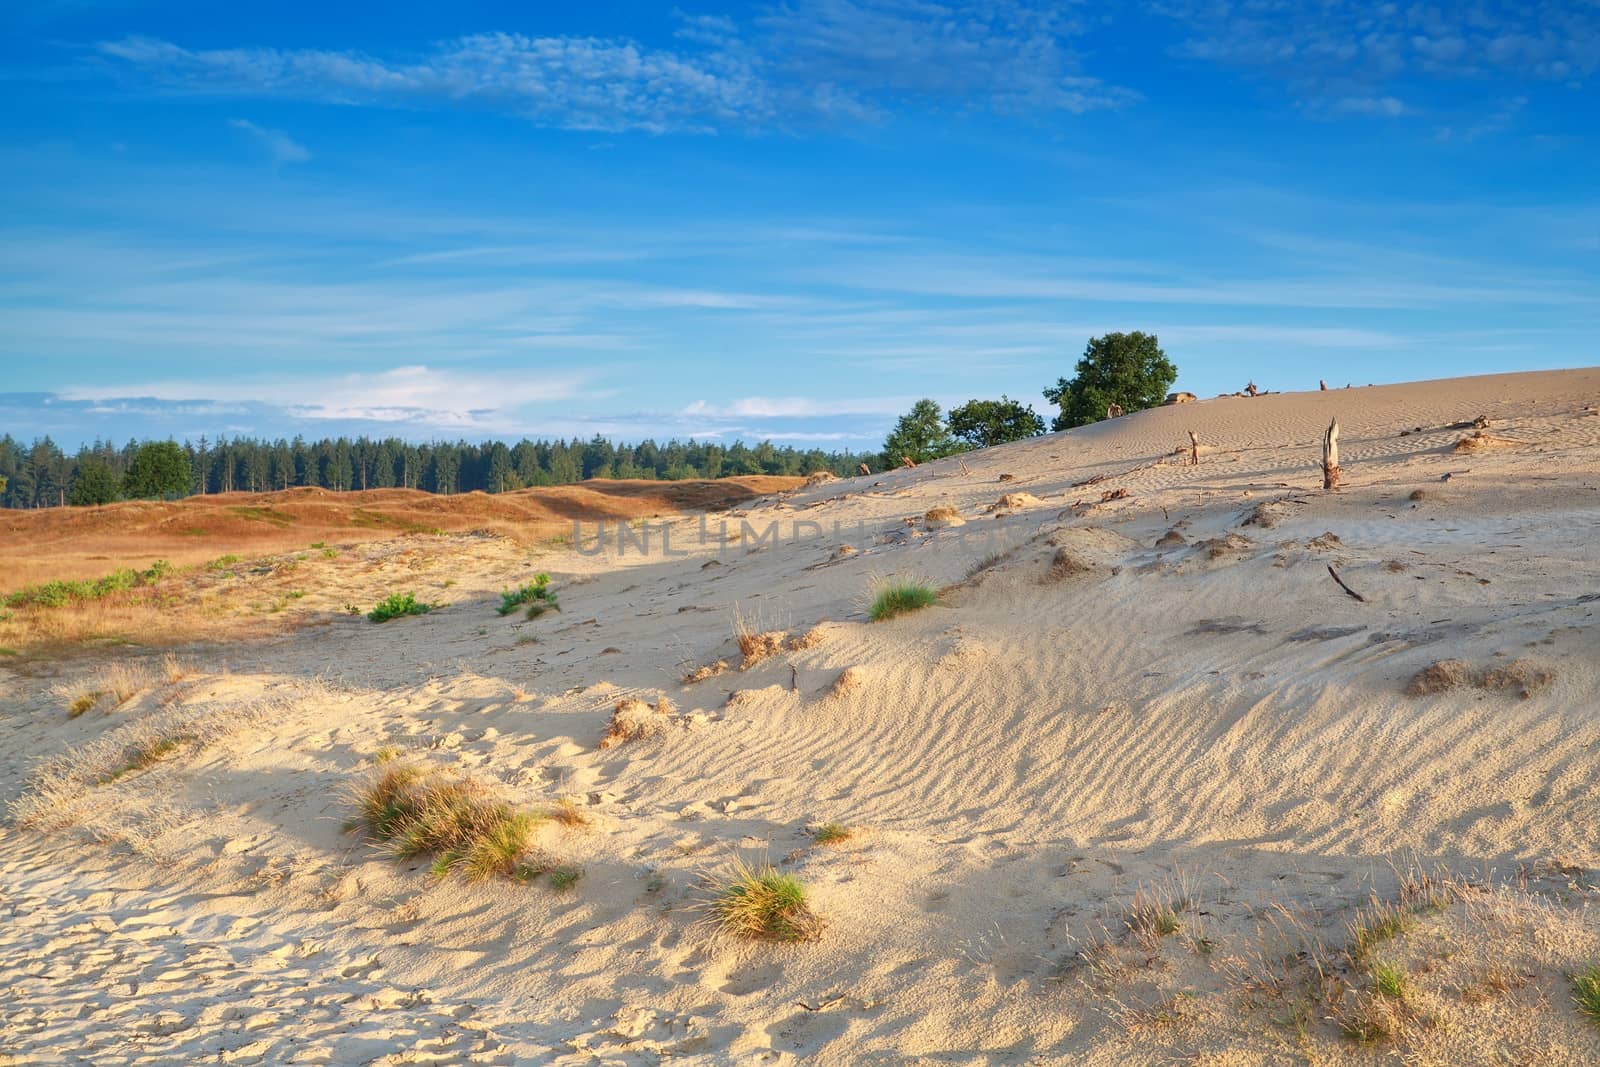 gold morning sunlight over sand dunes, Drents-Friese Wold, Netherlands